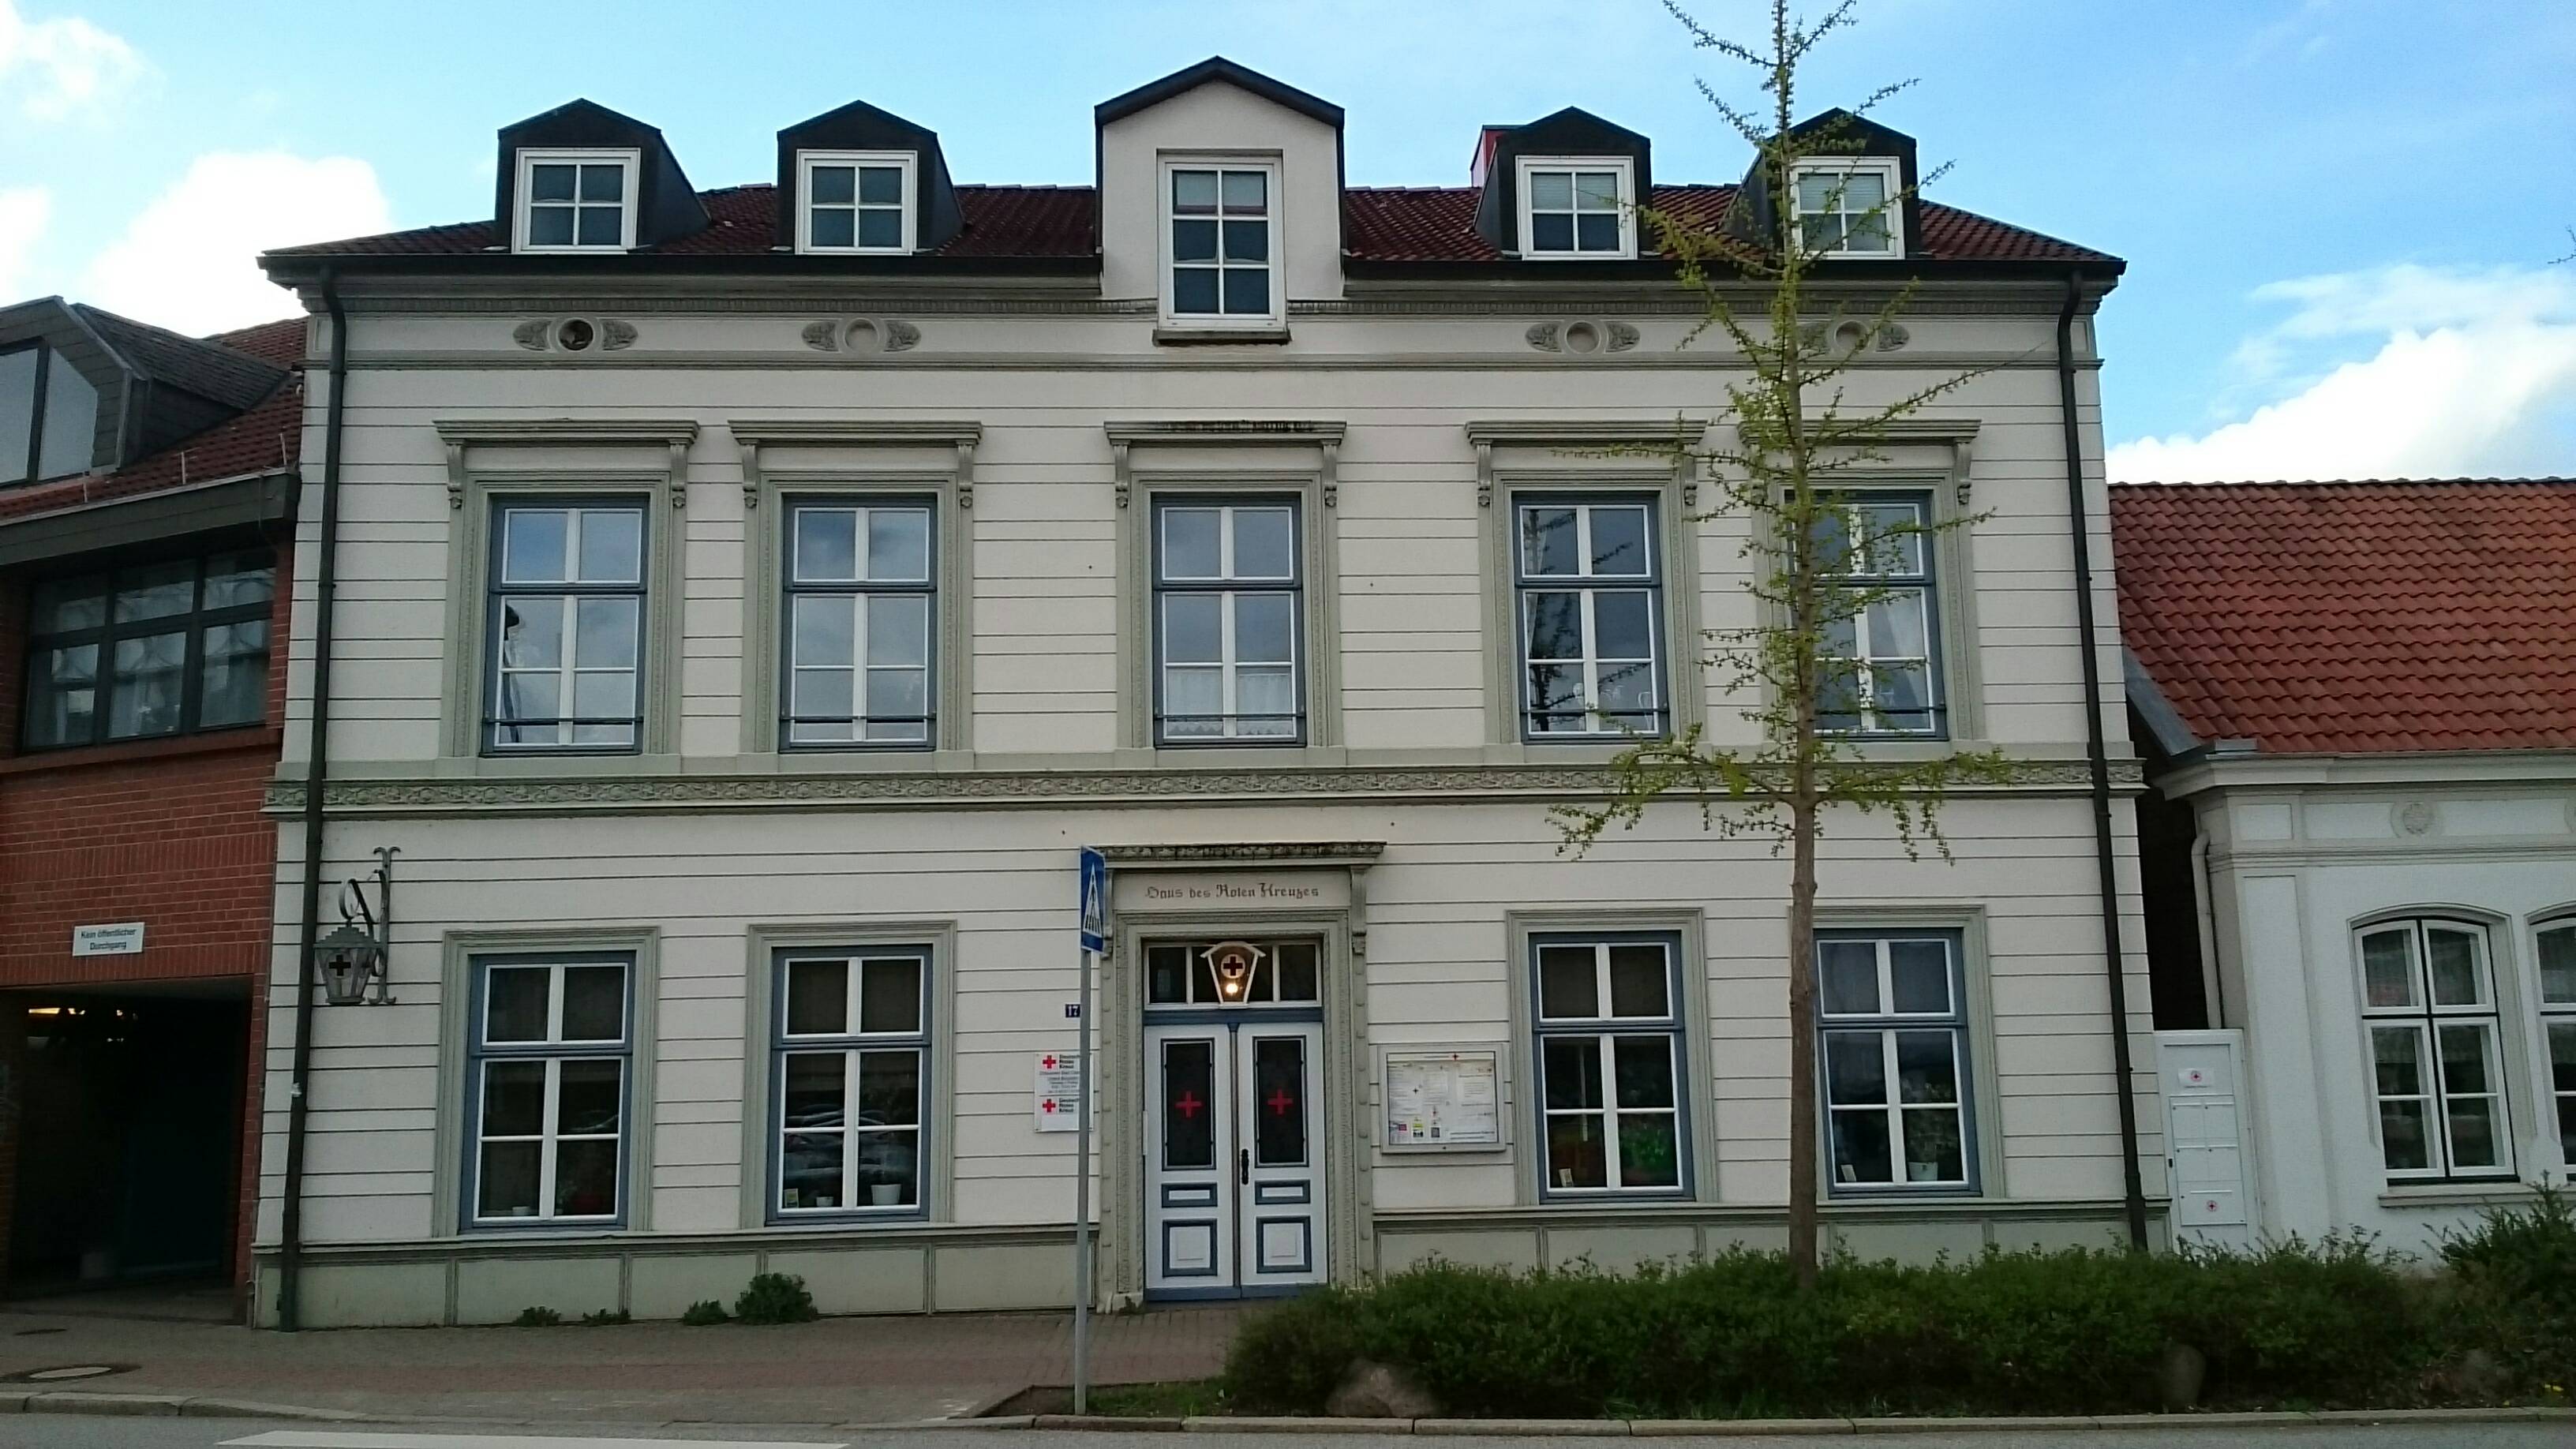 DRK Deutsches Rotes Kreuz e.V. Ortsverein in 23843 Bad Oldesloe